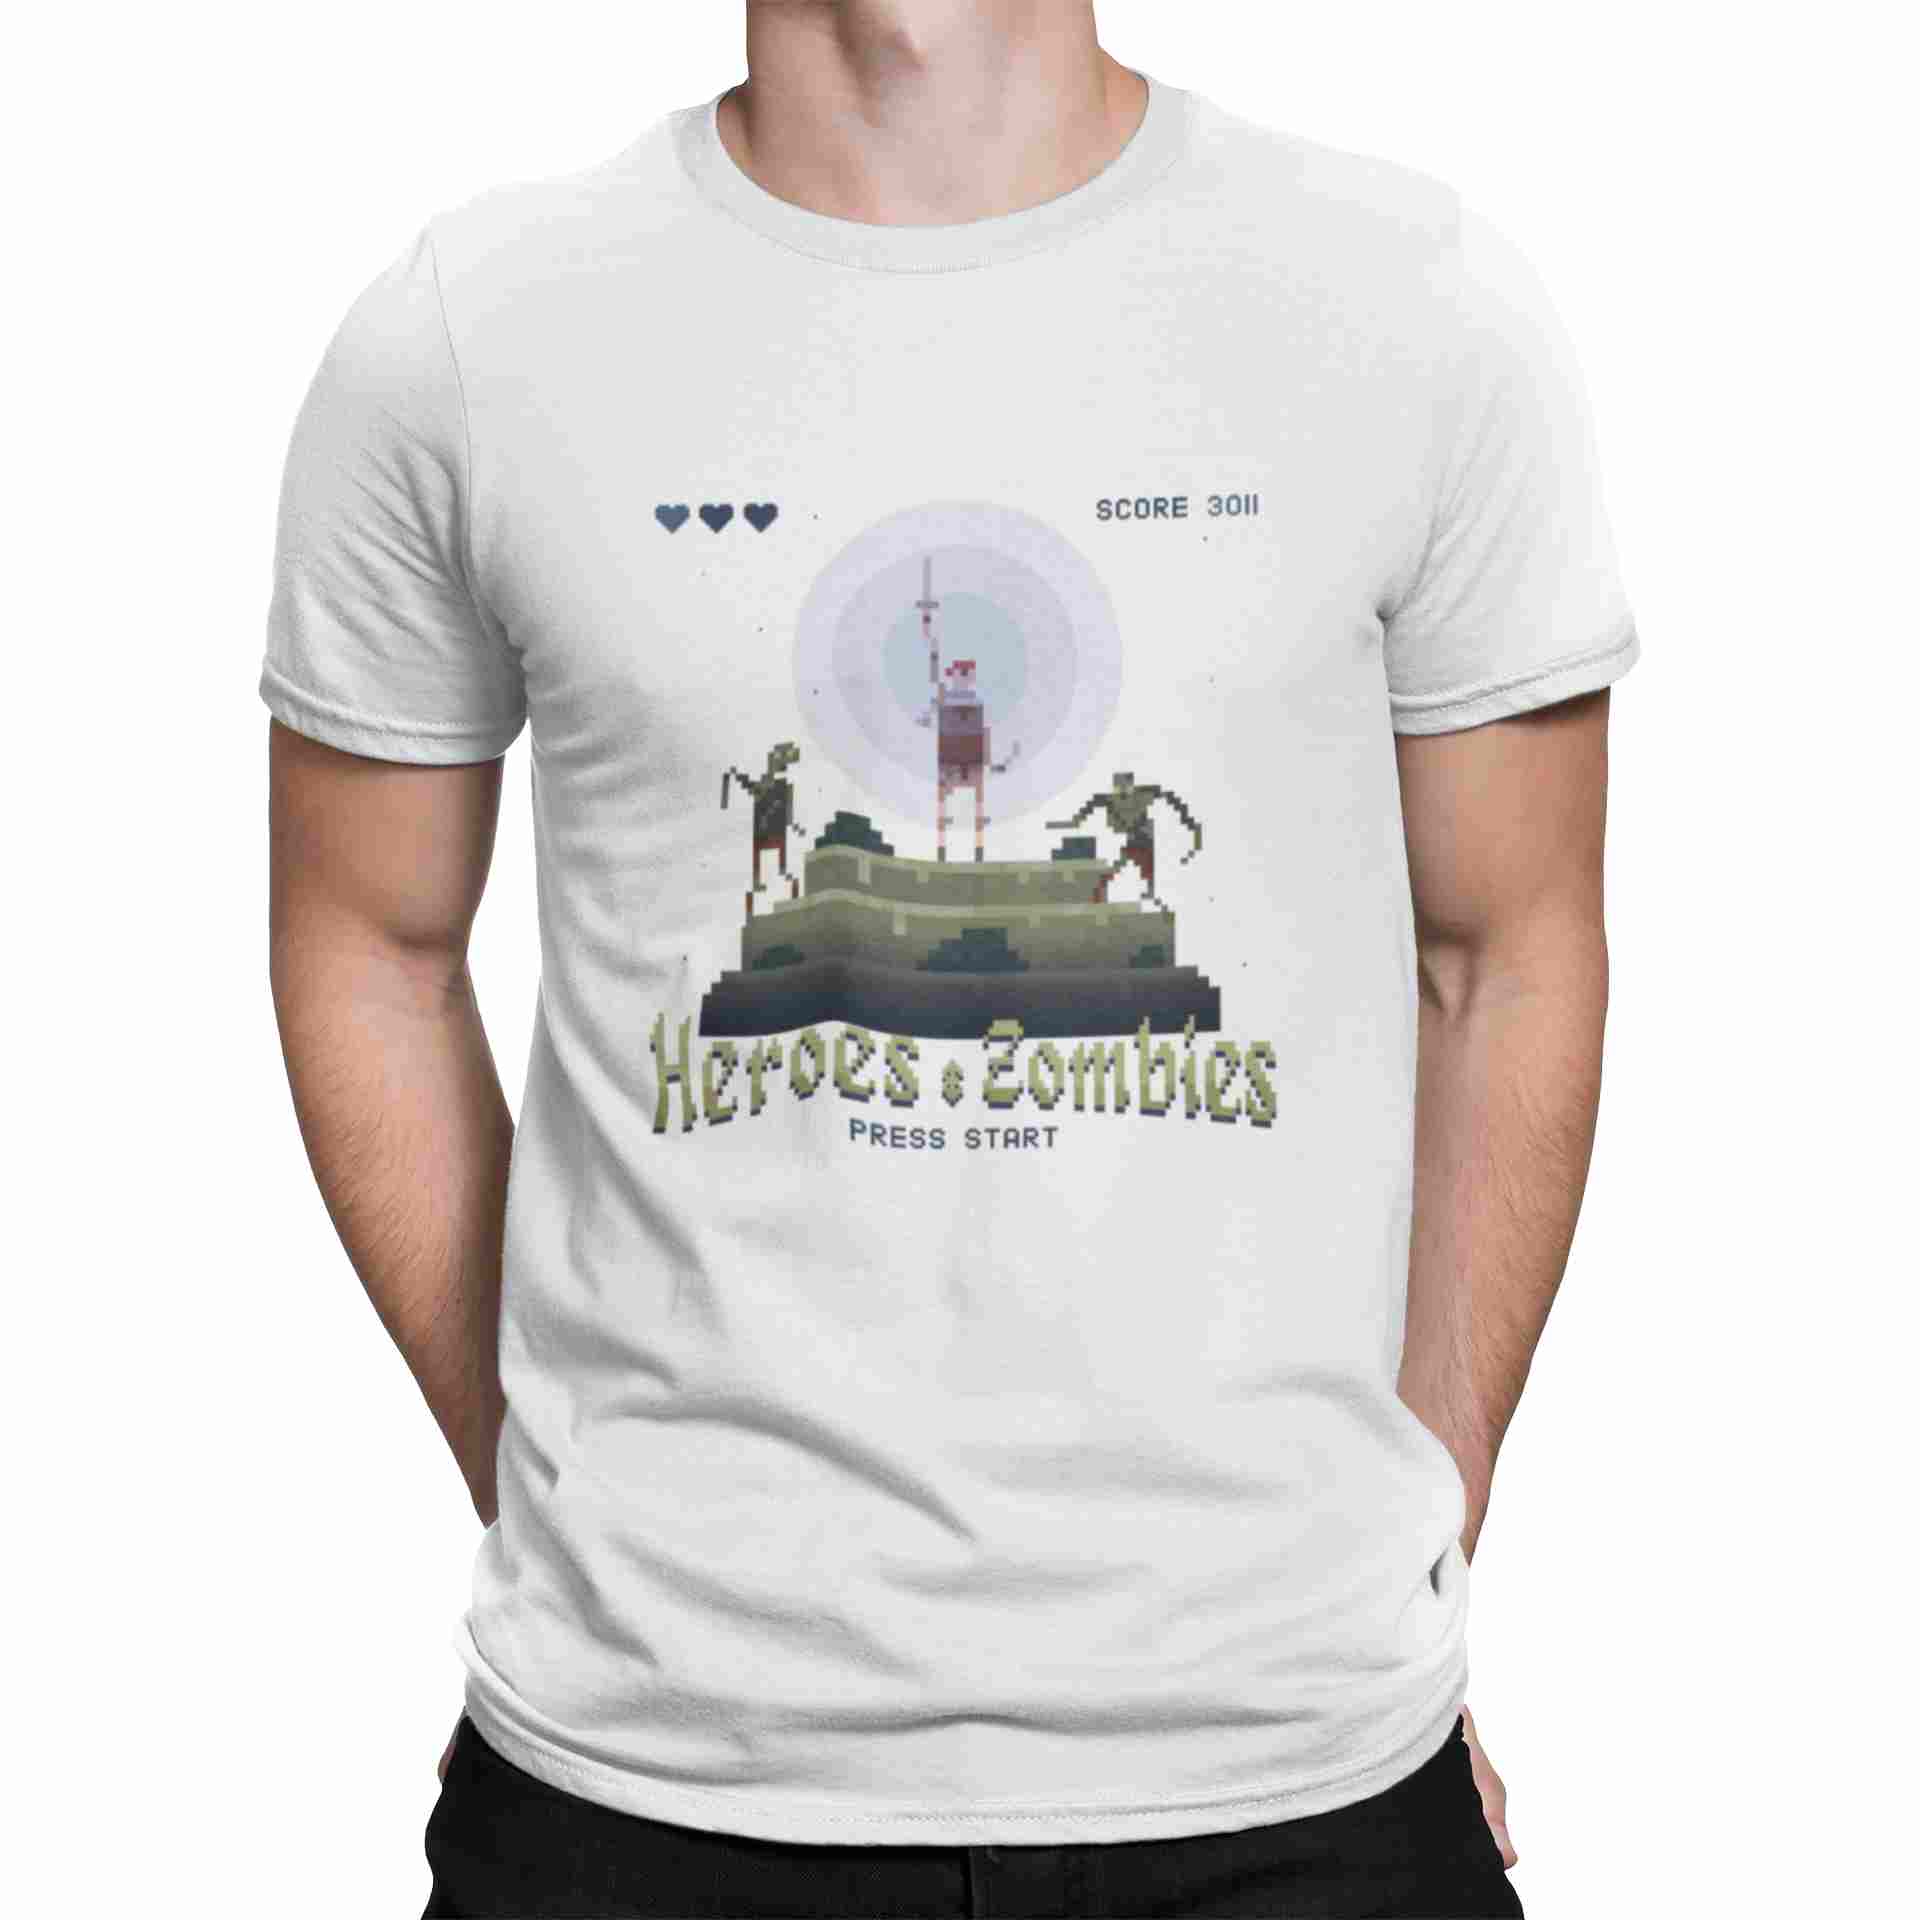 Camiseta Hombres retro Heroes y Zombies